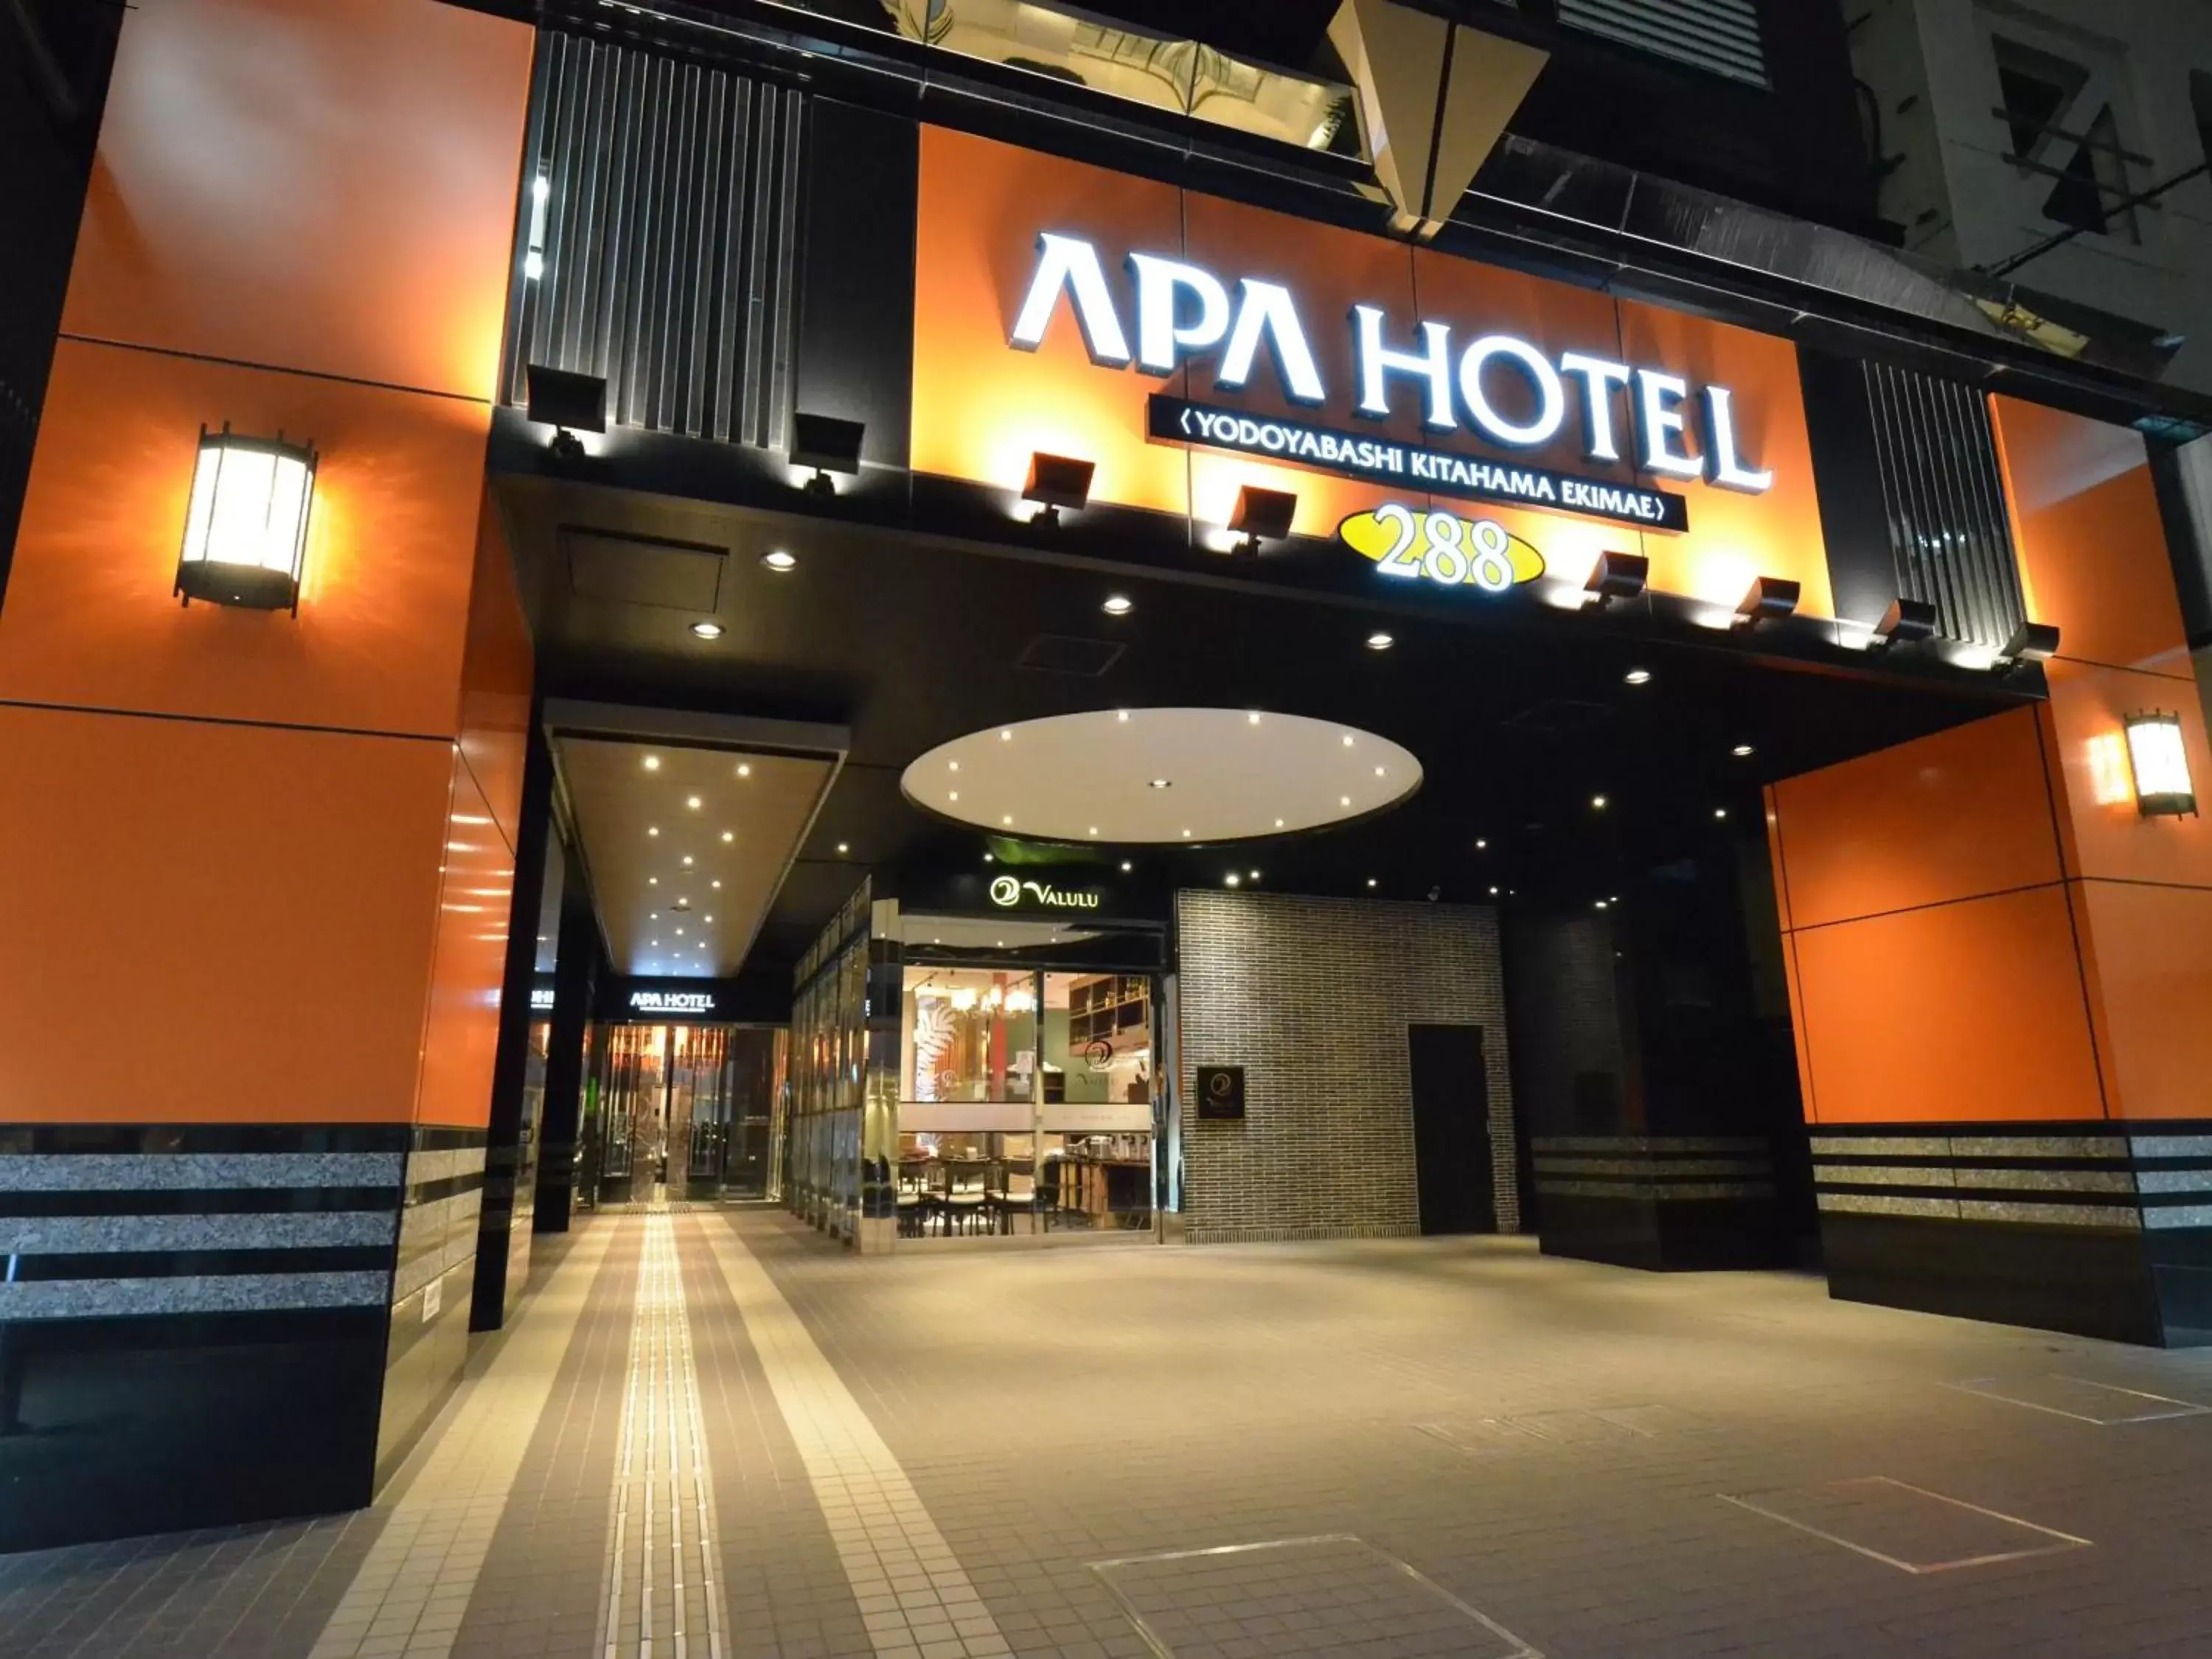 Facade/entrance in APA Hotel Yodoyabashi Kitahama Ekimae